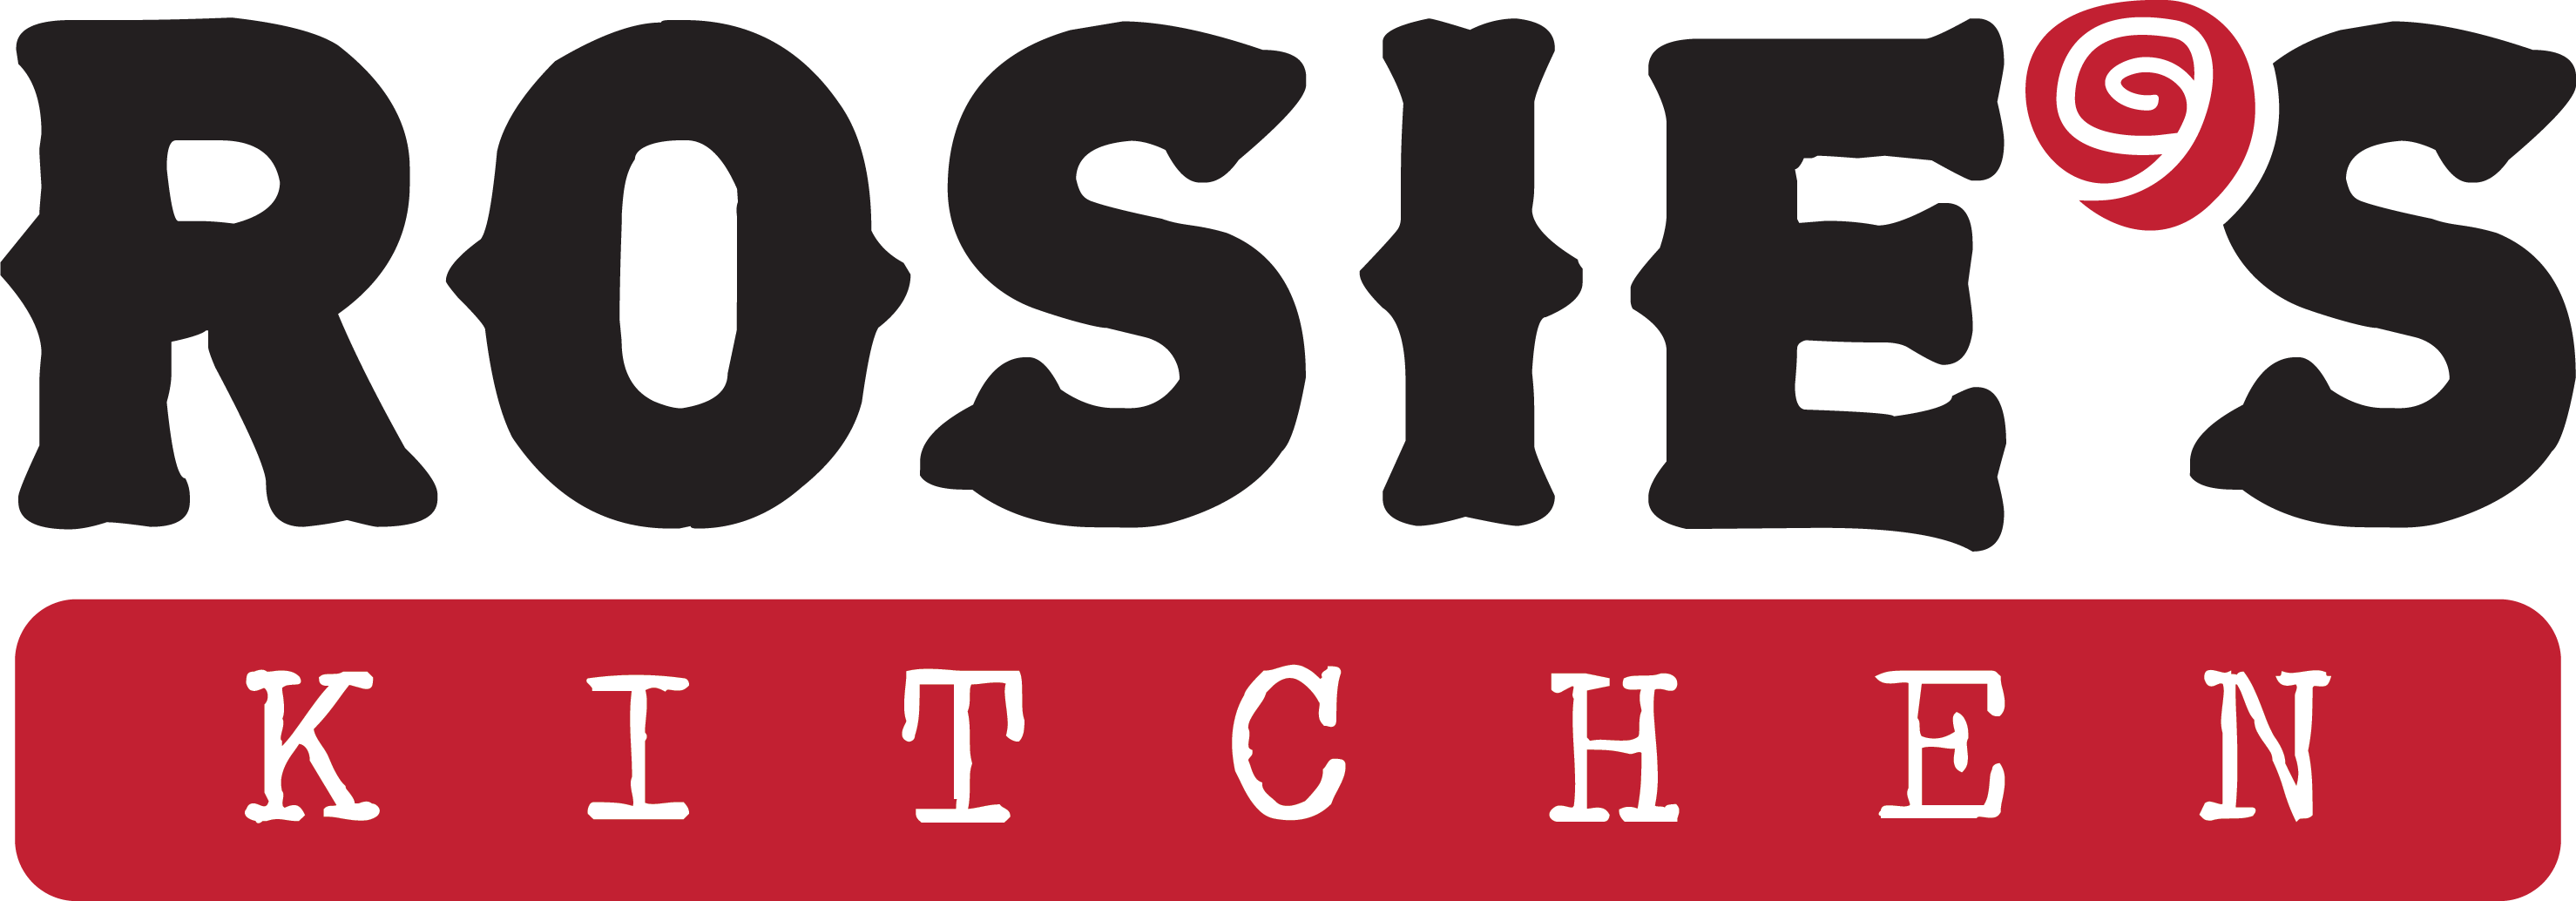 rosies kitchen logo